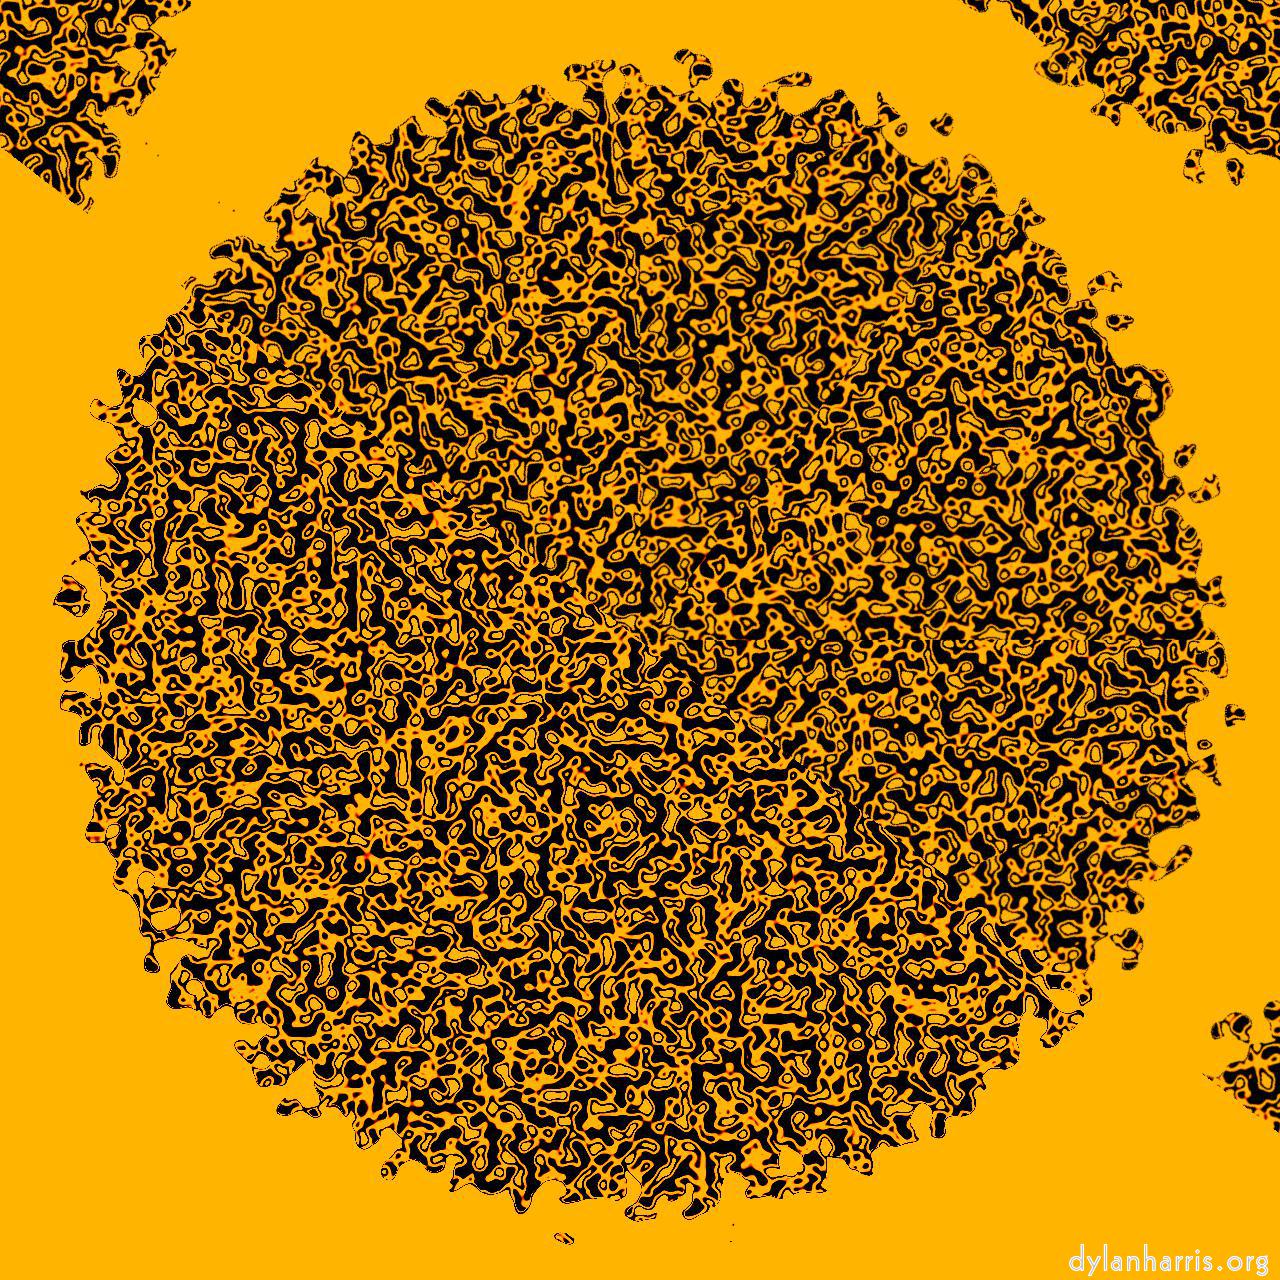 image: variations :: pollen